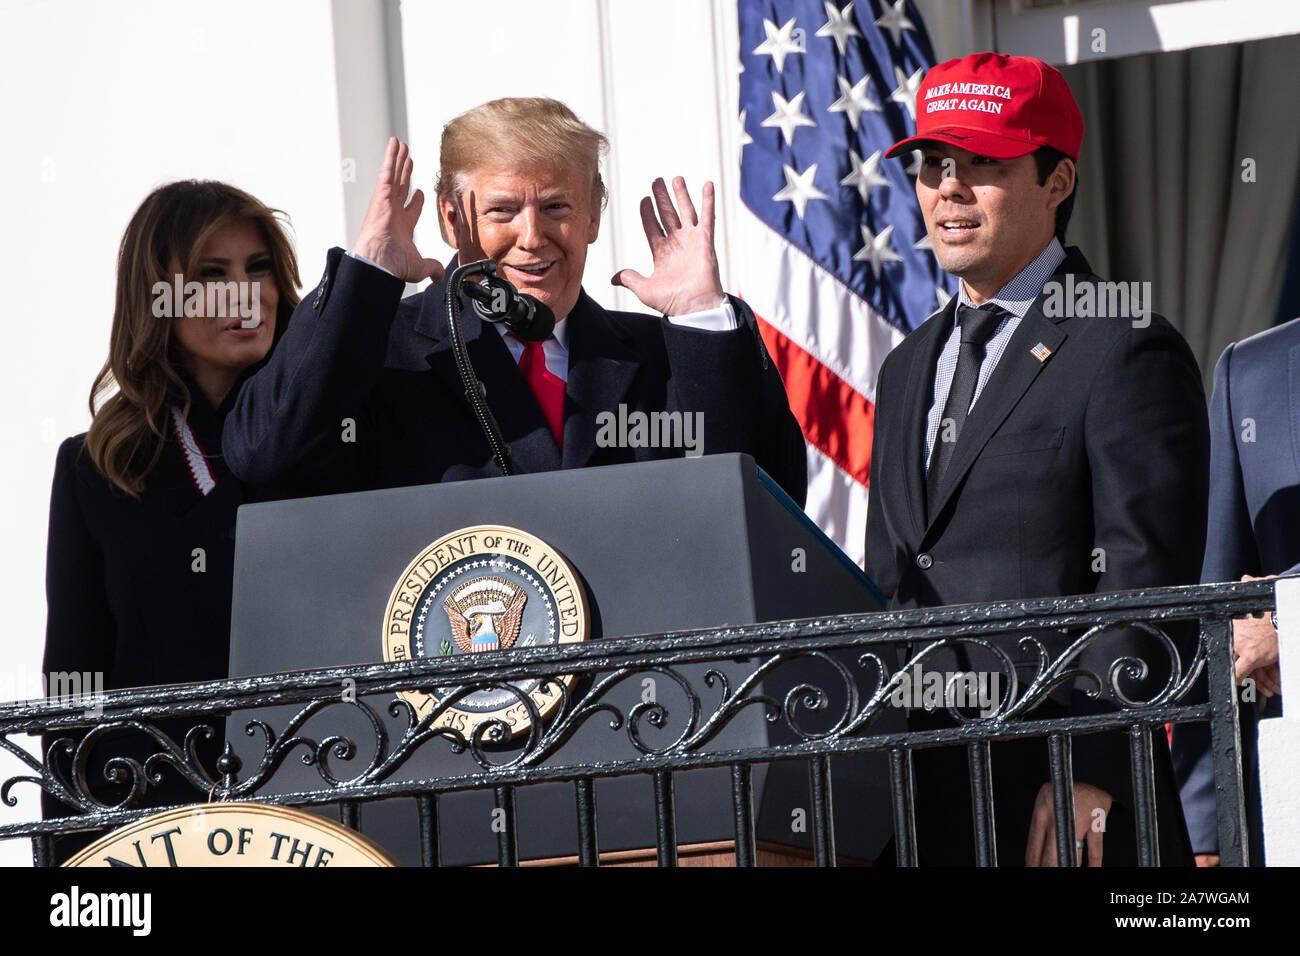 Kurt Suzuki: MAGA hat at White House 'just trying to have some fun